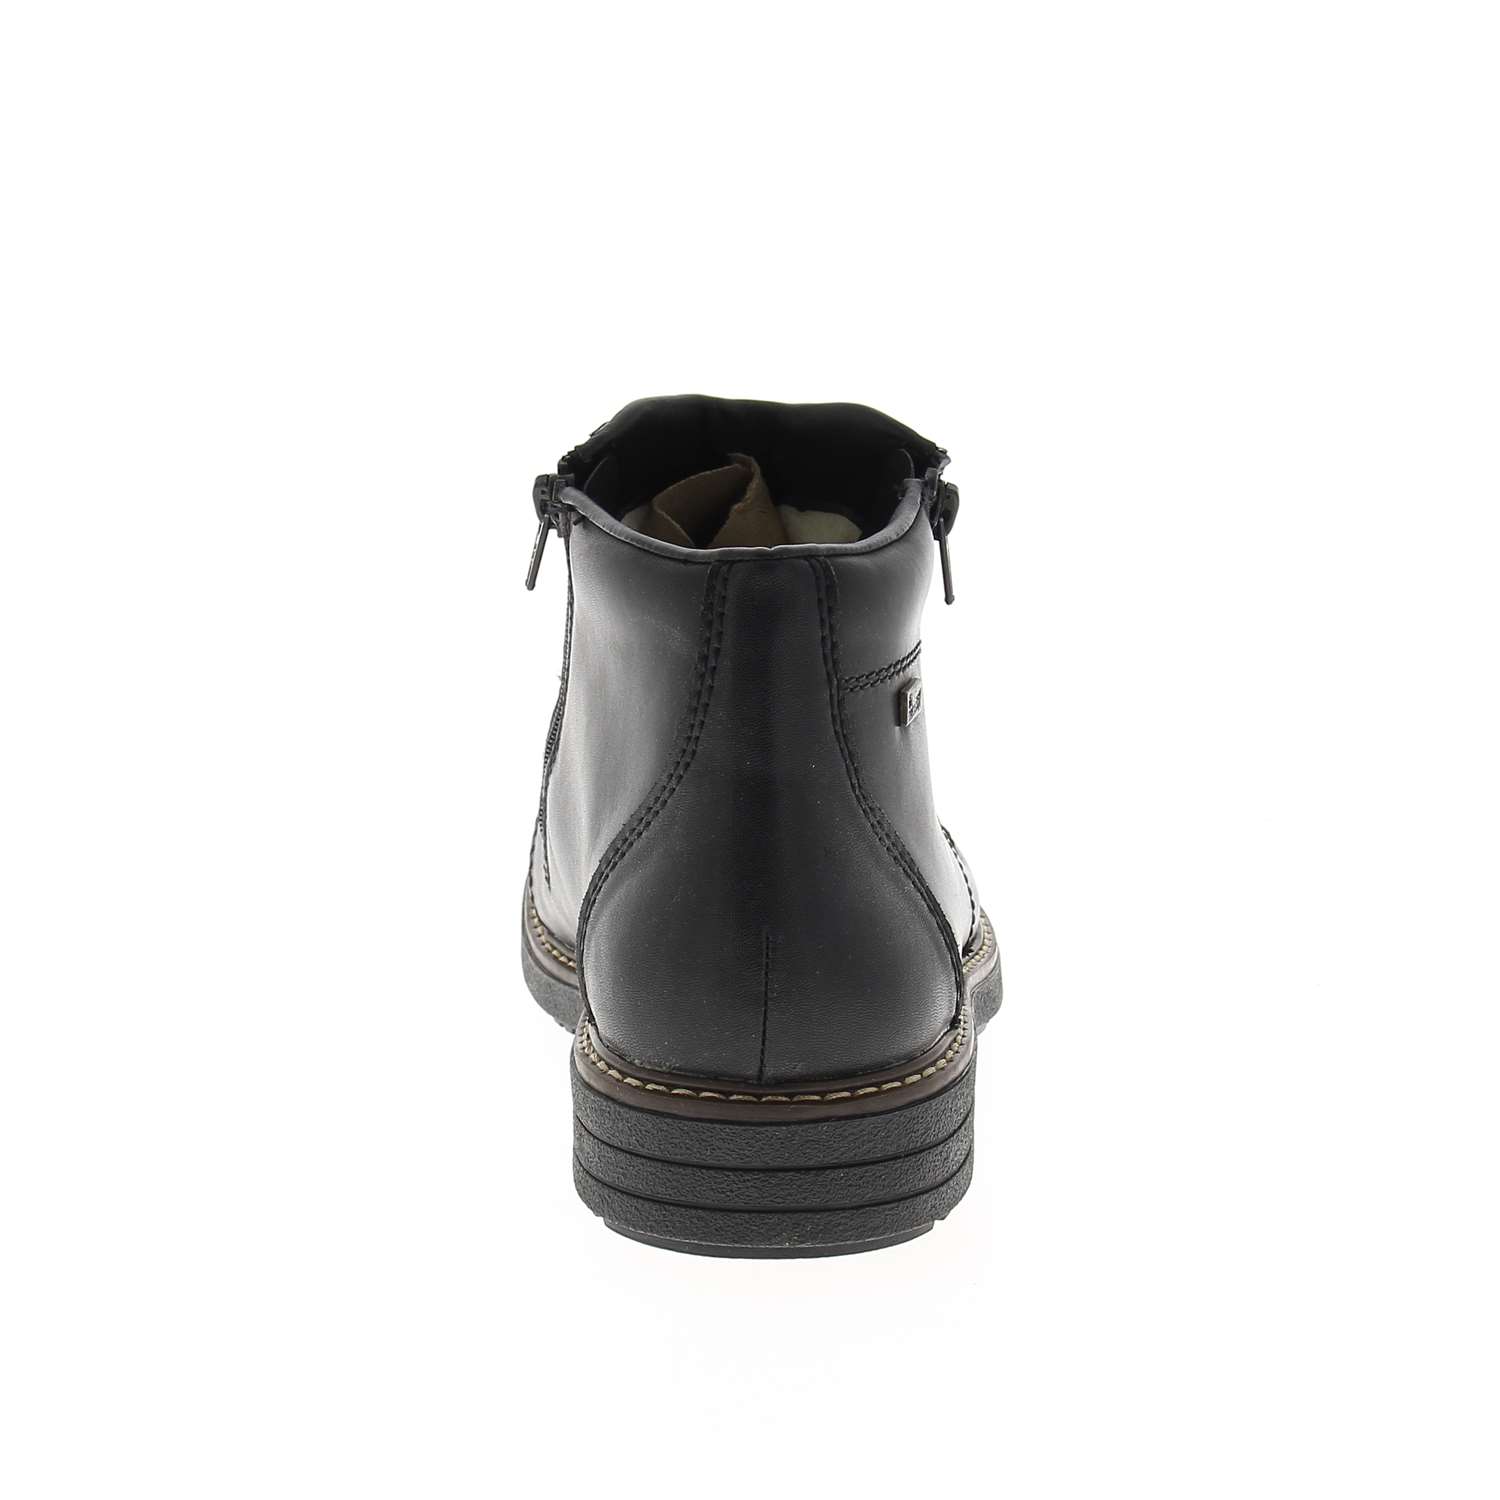 04 - RIPOLAZO - RIEKER - Boots et bottines - Cuir